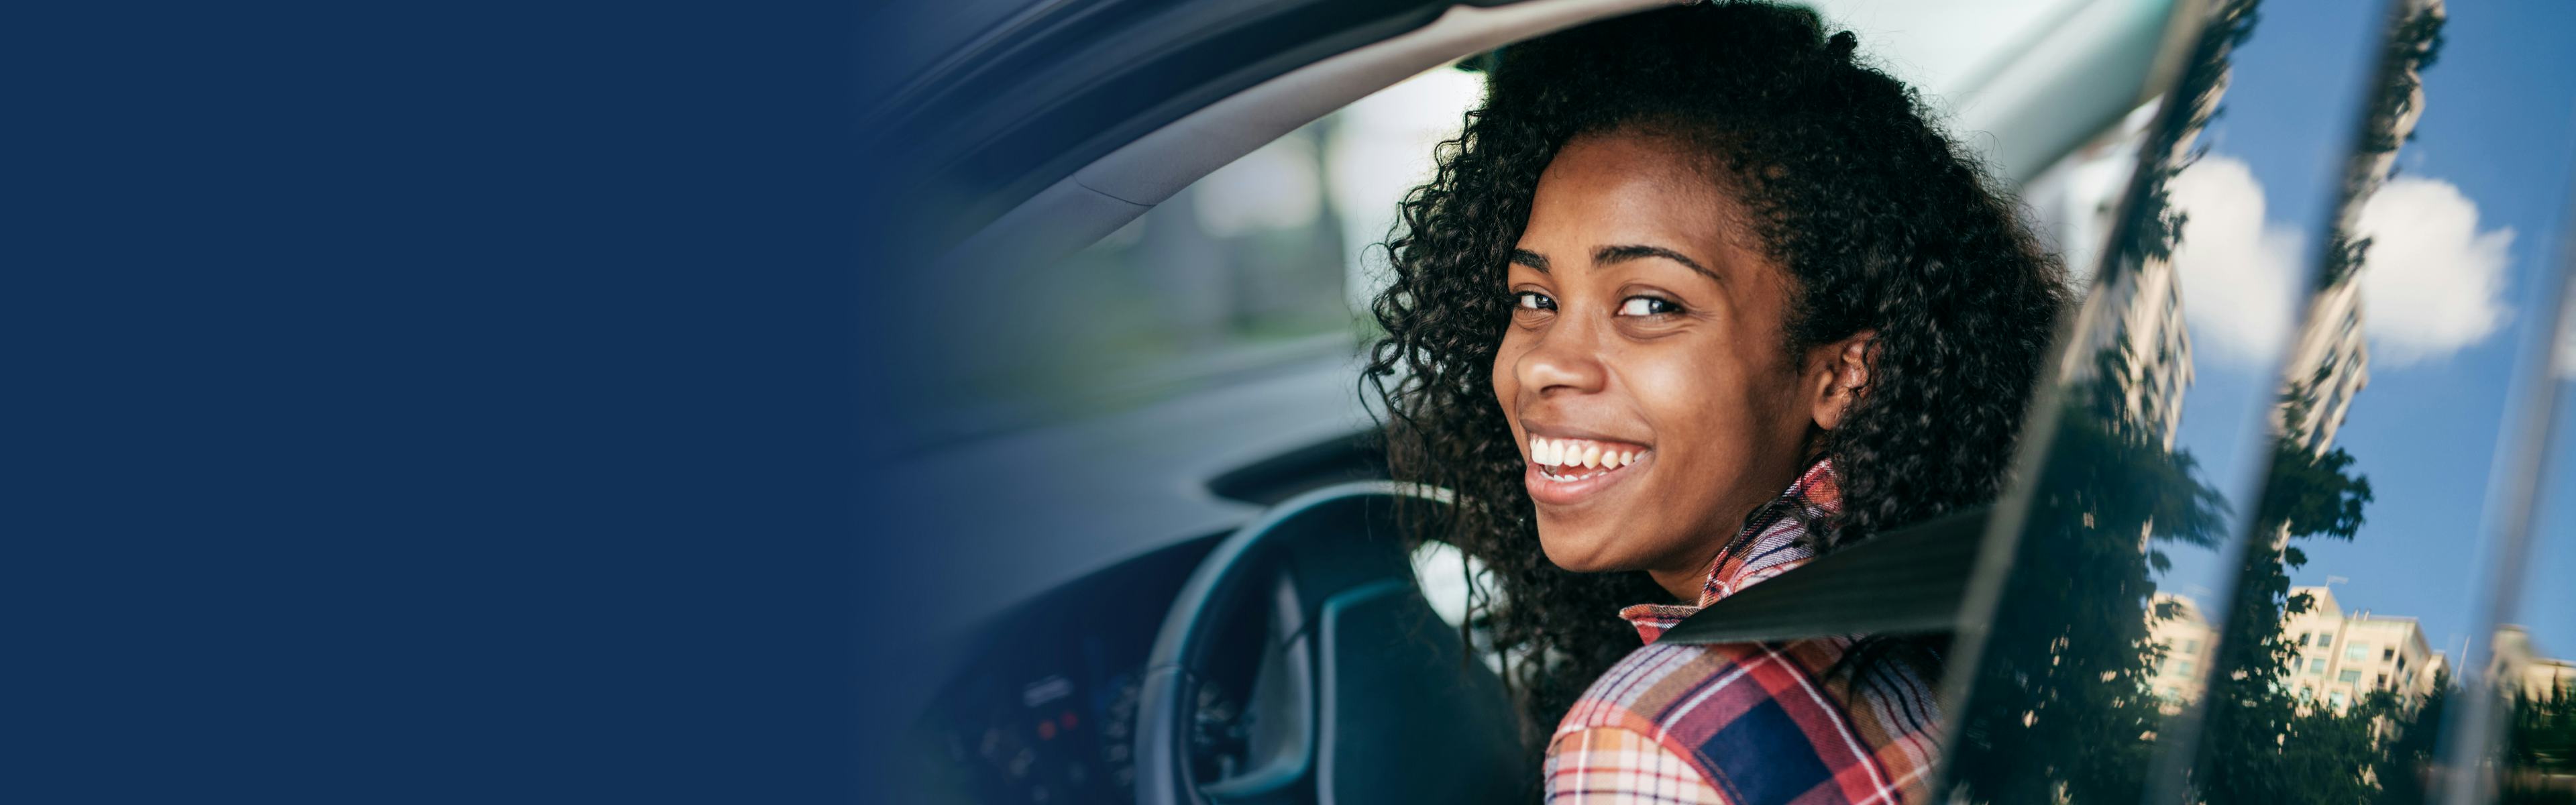 Woman in car smiling 